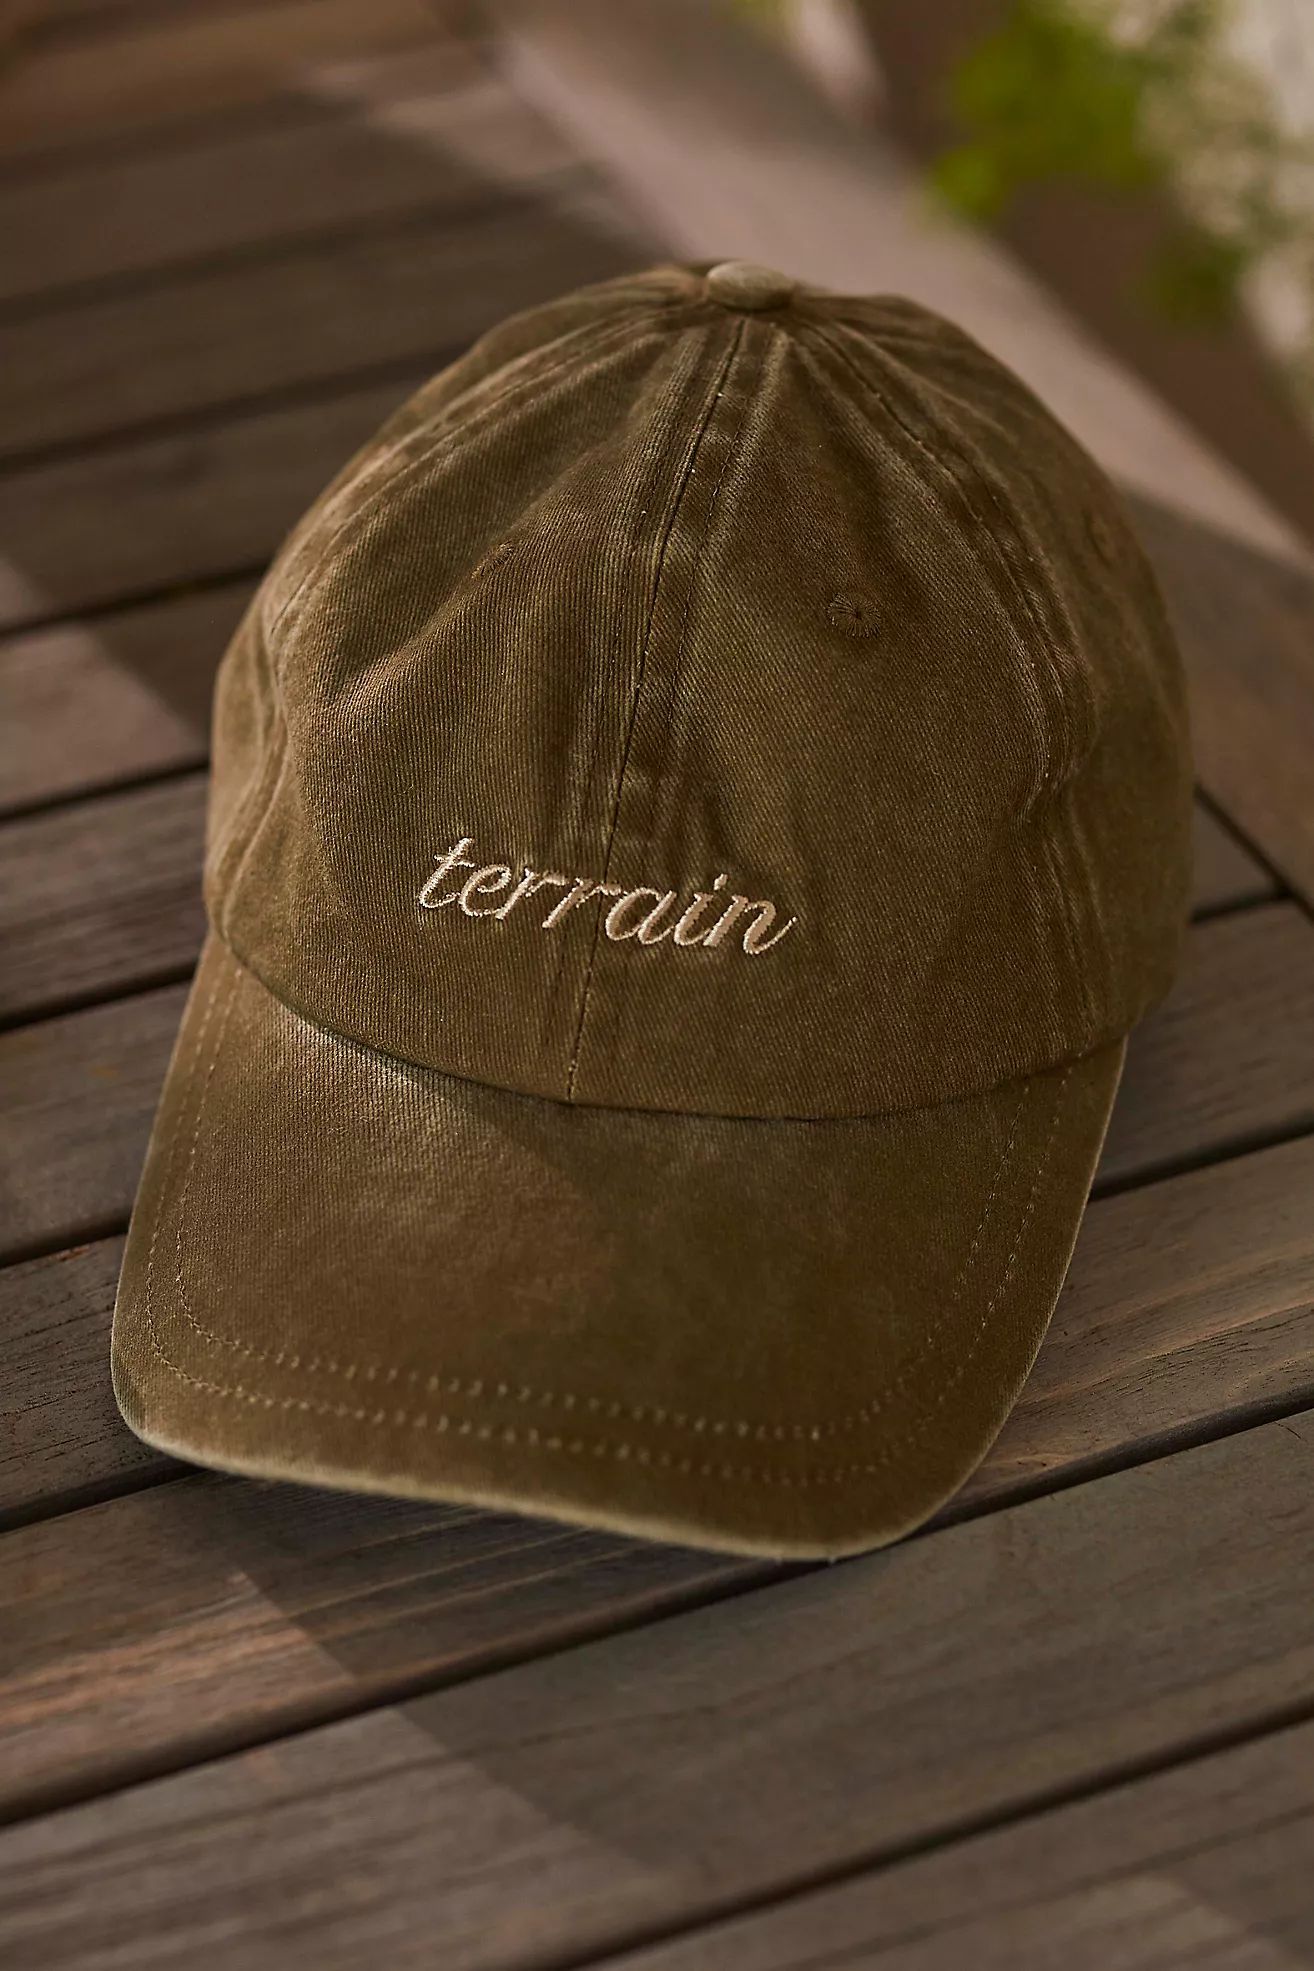 Terrain Baseball Hat | Terrain